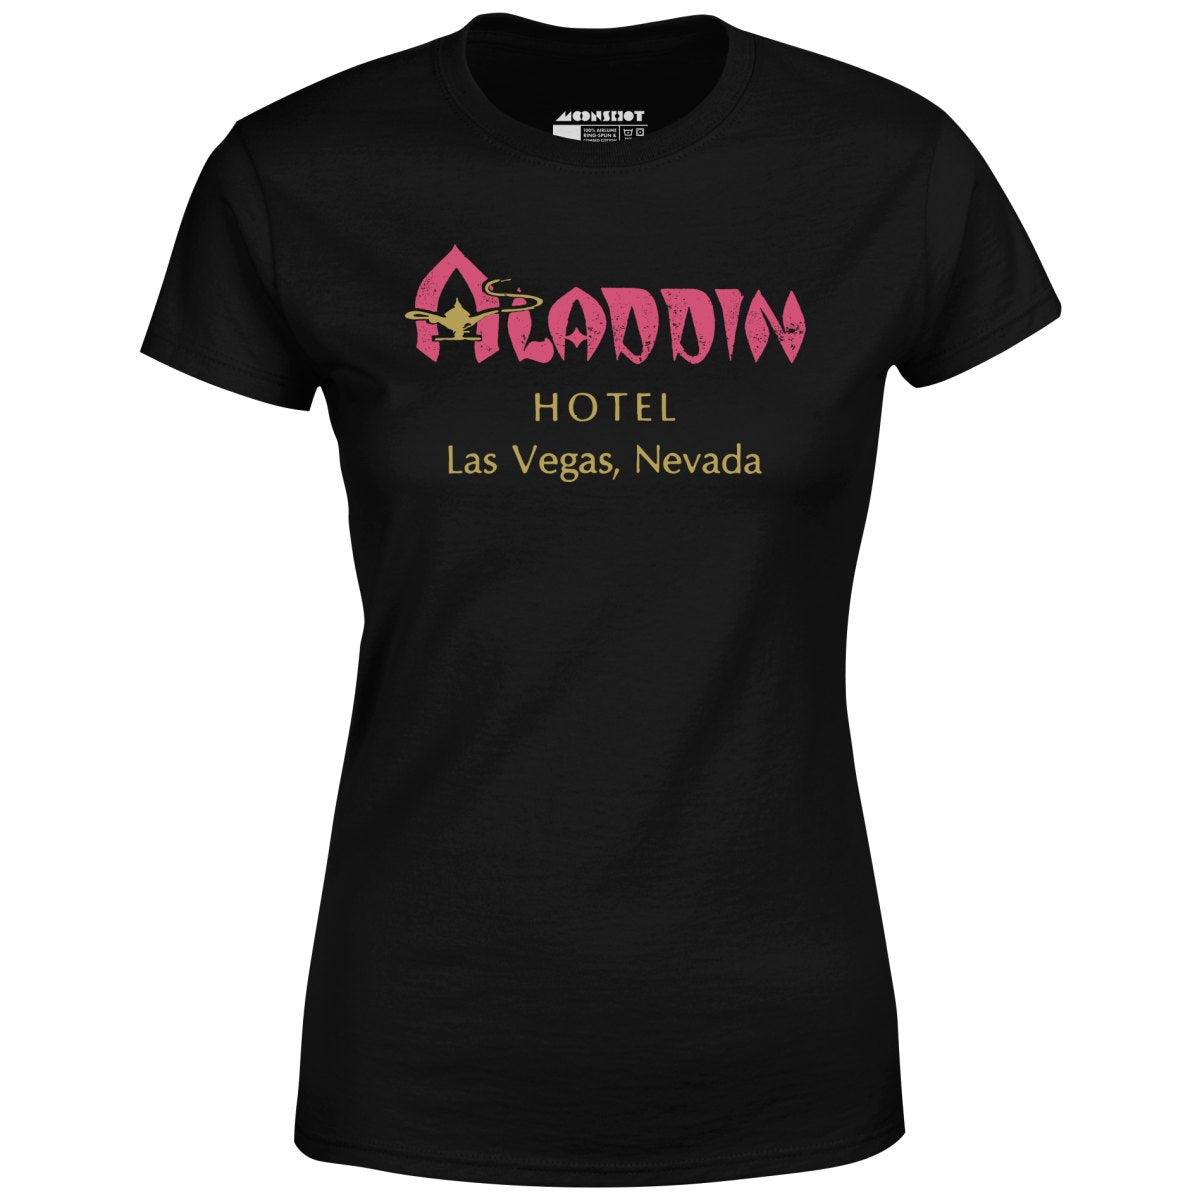 Aladdin Hotel - Vintage Las Vegas - Women's T-Shirt